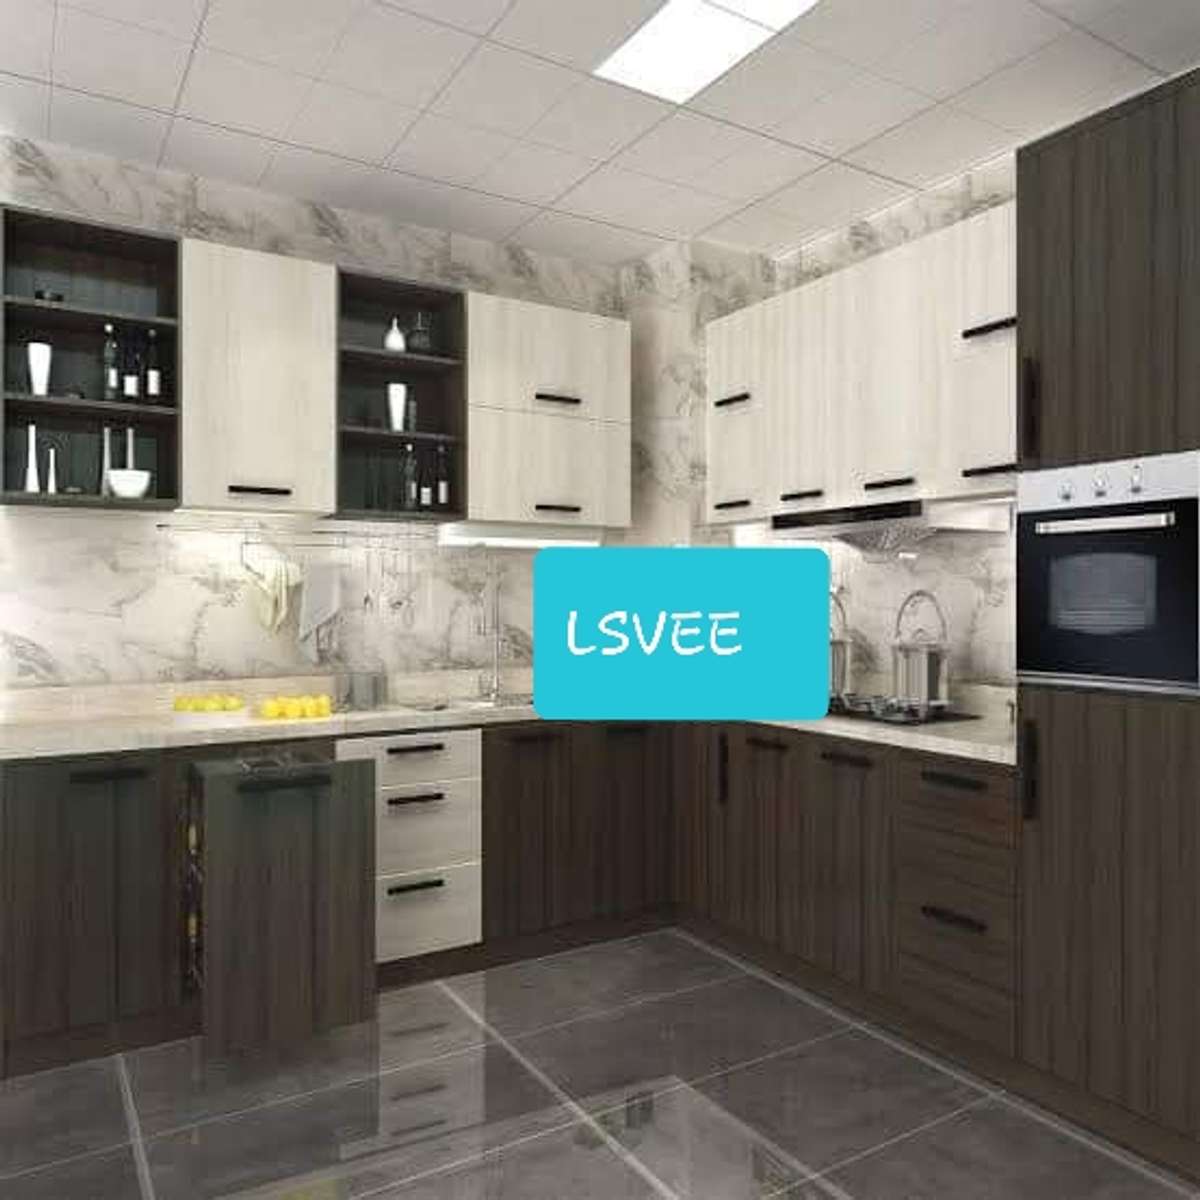 Beautiful Kitchen Cabinets 
#kitchendesign  #KitchenIdeas 
#modularkitchen #interiordesign #homedecor #lsveefurniture